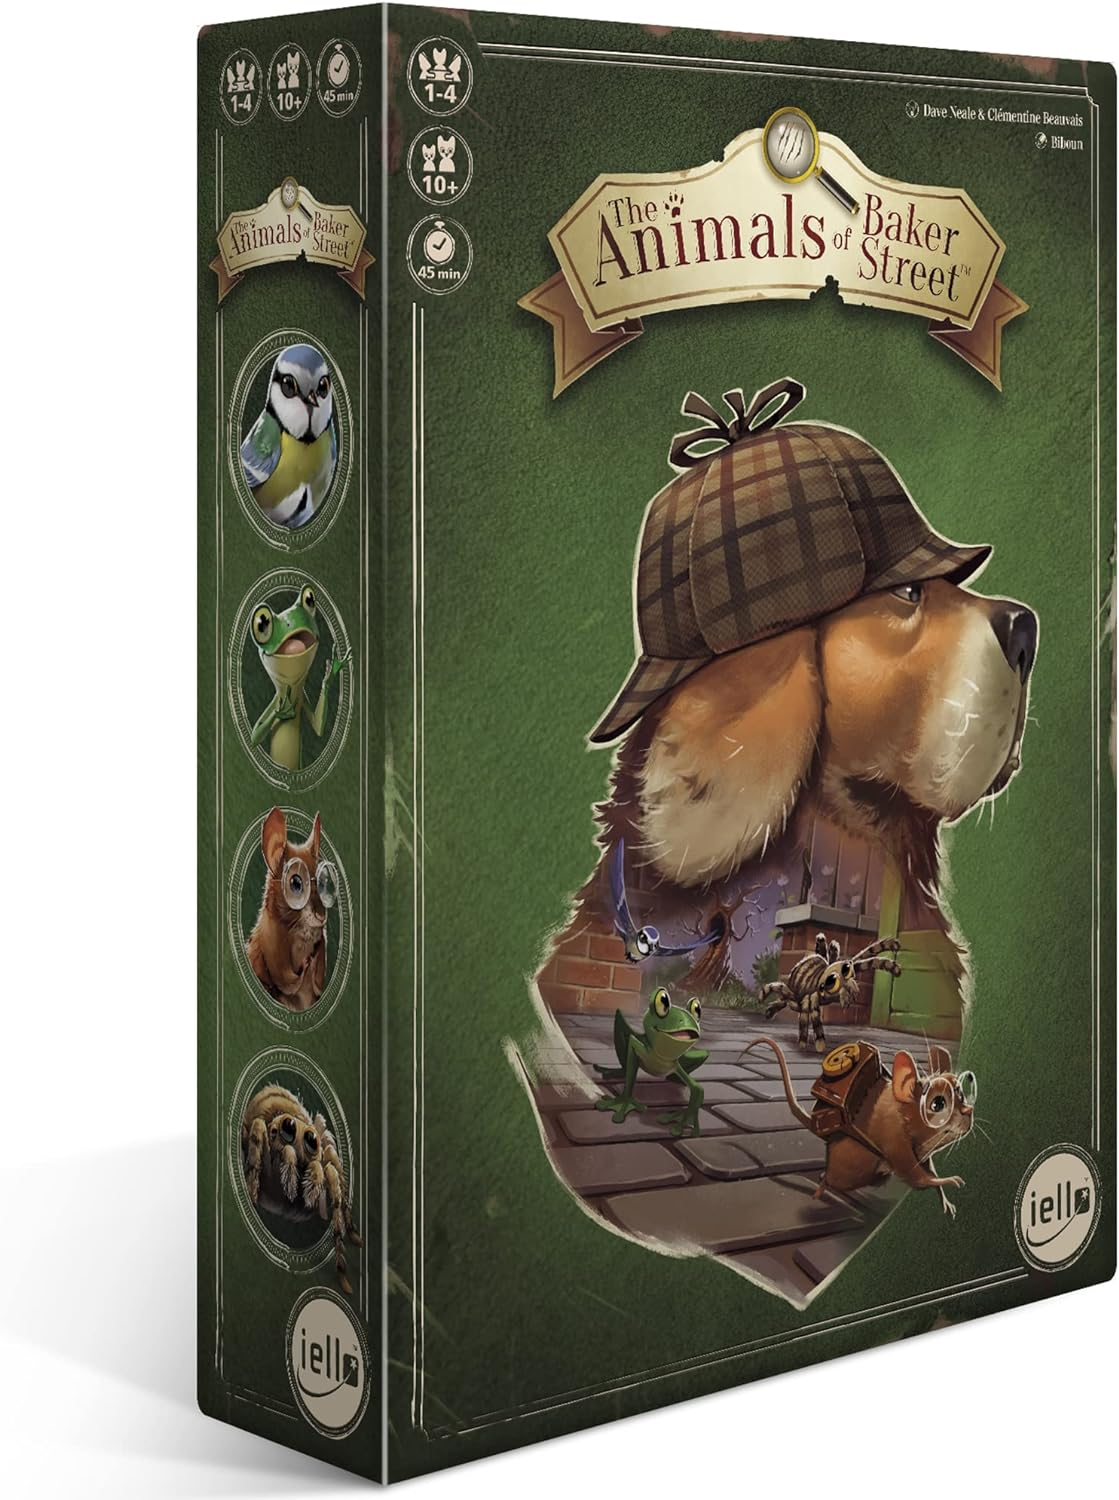 Amazon.com: IELLO: The Animals of Baker Street $22.99